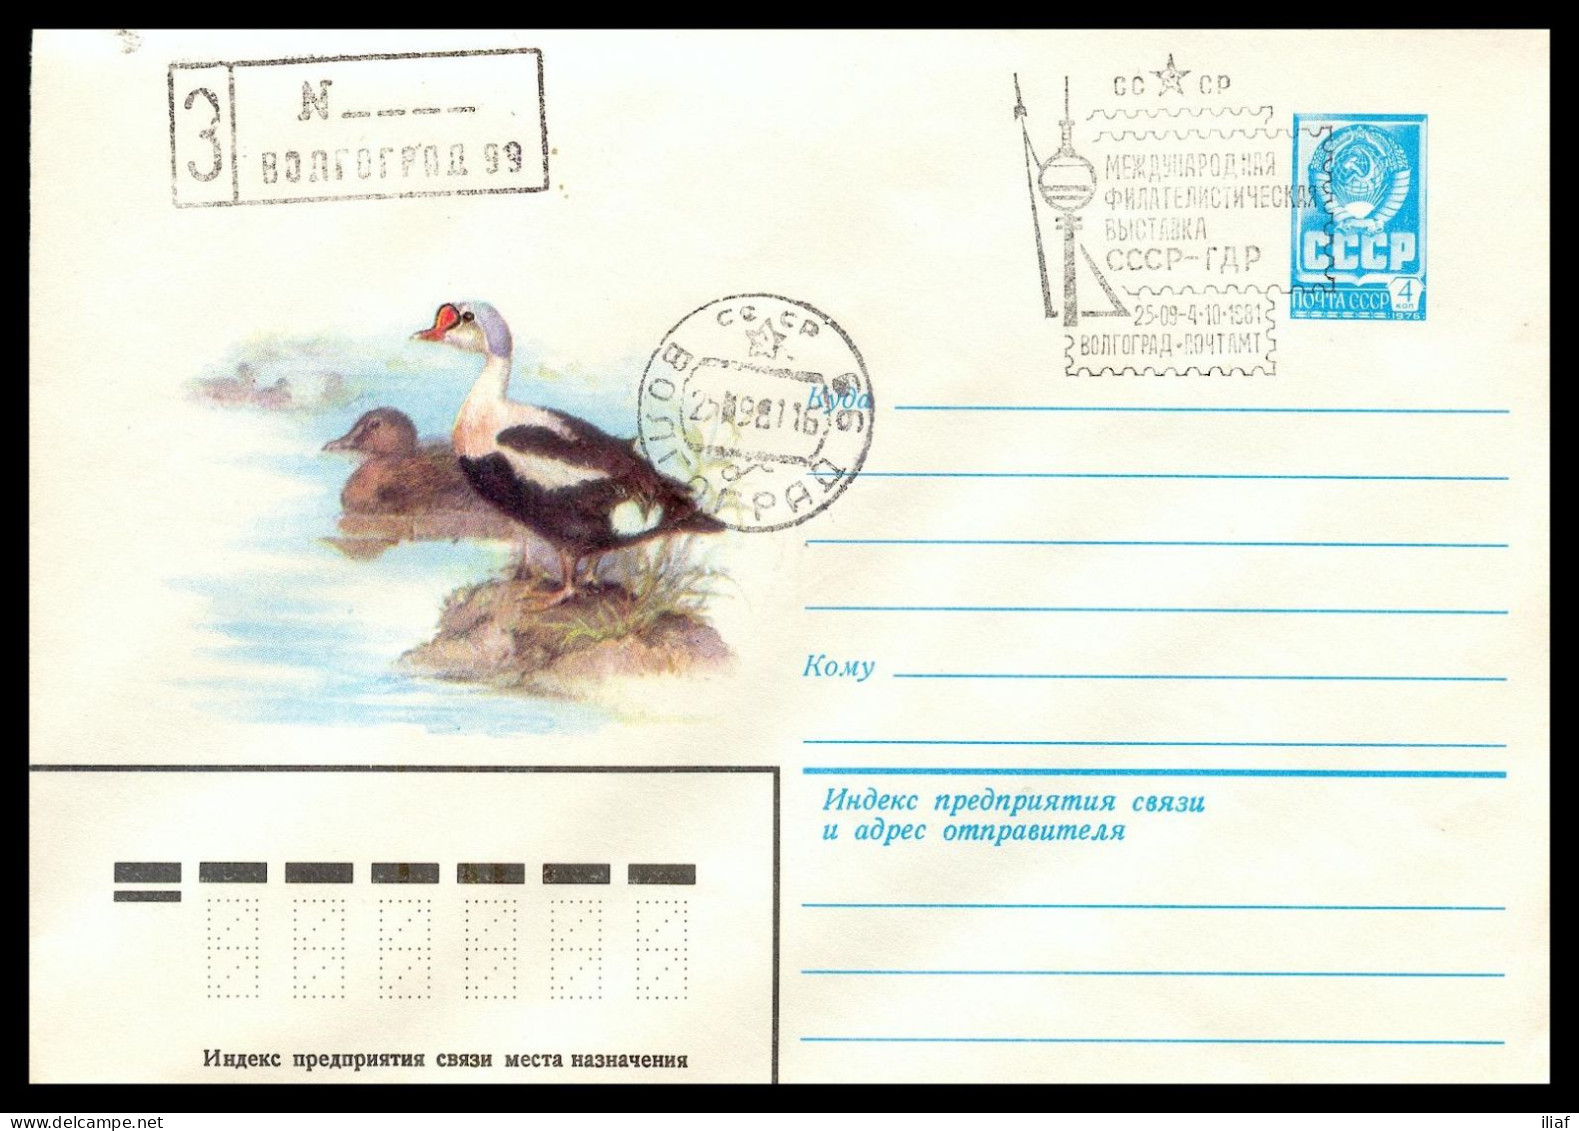 RUSSIA & USSR International Philatelic Exhibition “USSR-GDR” Volgograd-81 Illustrated Envelope With Special Cancellation - Philatelic Exhibitions